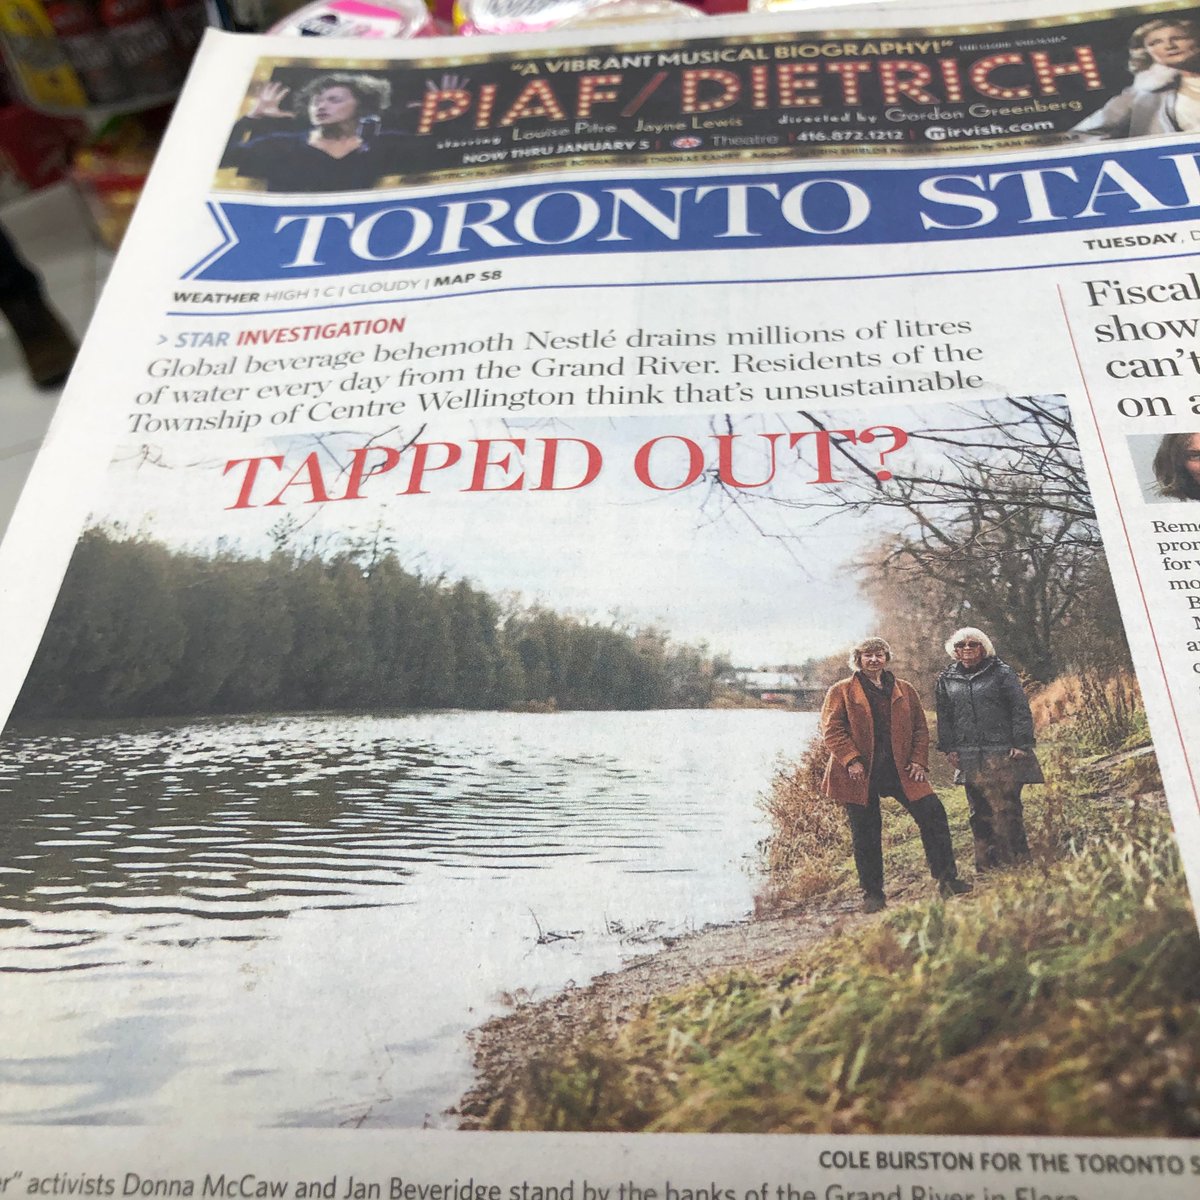 #SaveOurWater on the front page of Tuesday's @TorontoStar. 

#waterisahumanright #waterforlife #saynotonestle #waterforlifenotforprofit